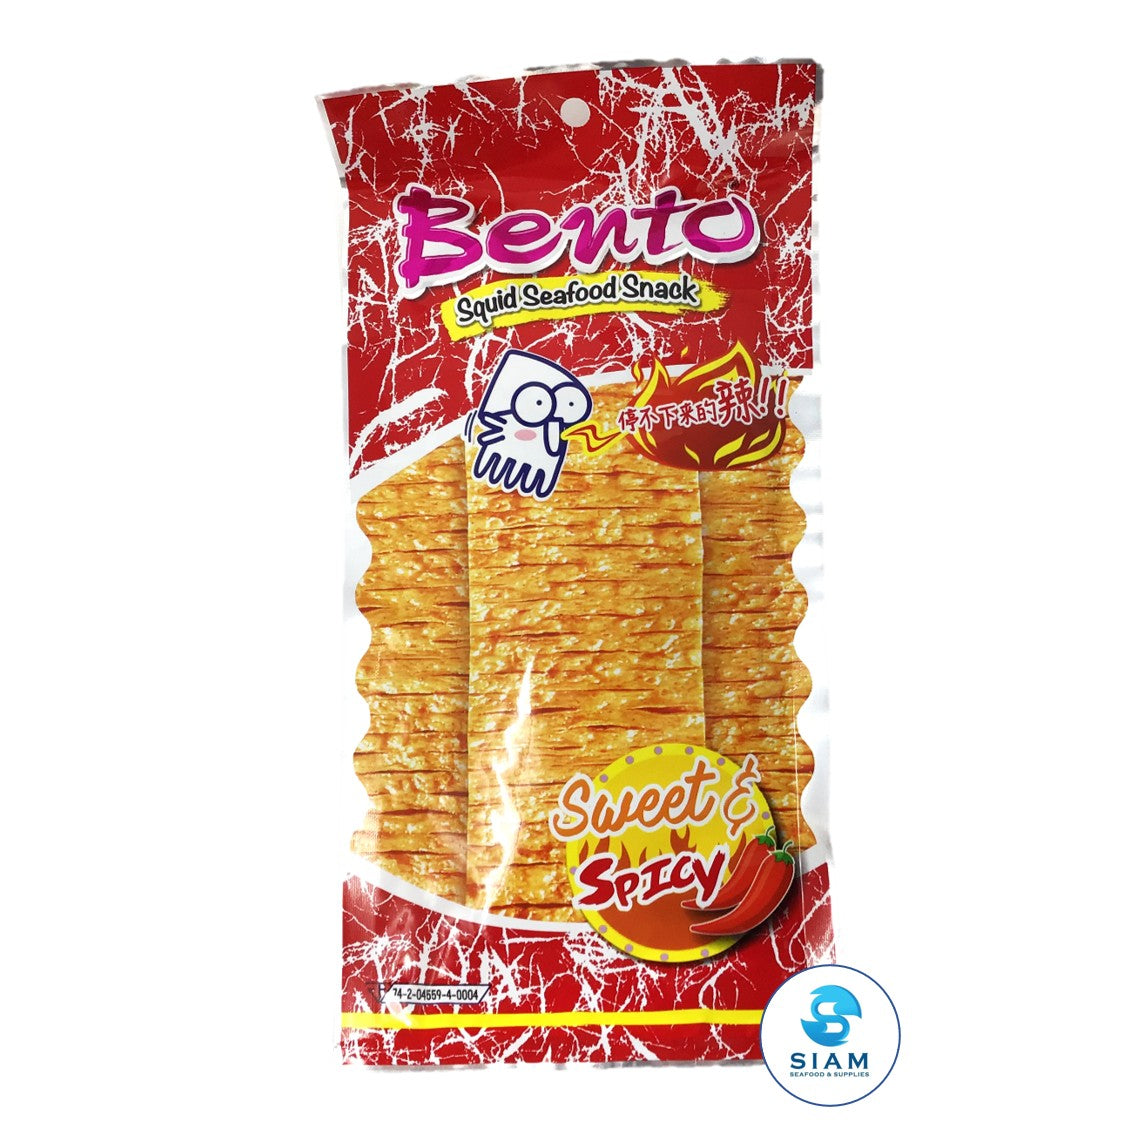 Squid Seafood Snack, Sweet & Spicy Flavor - Bento (0.7 oz) เบนโตะ ปลาหมึกอบทรงเครื่อง shippable Bento